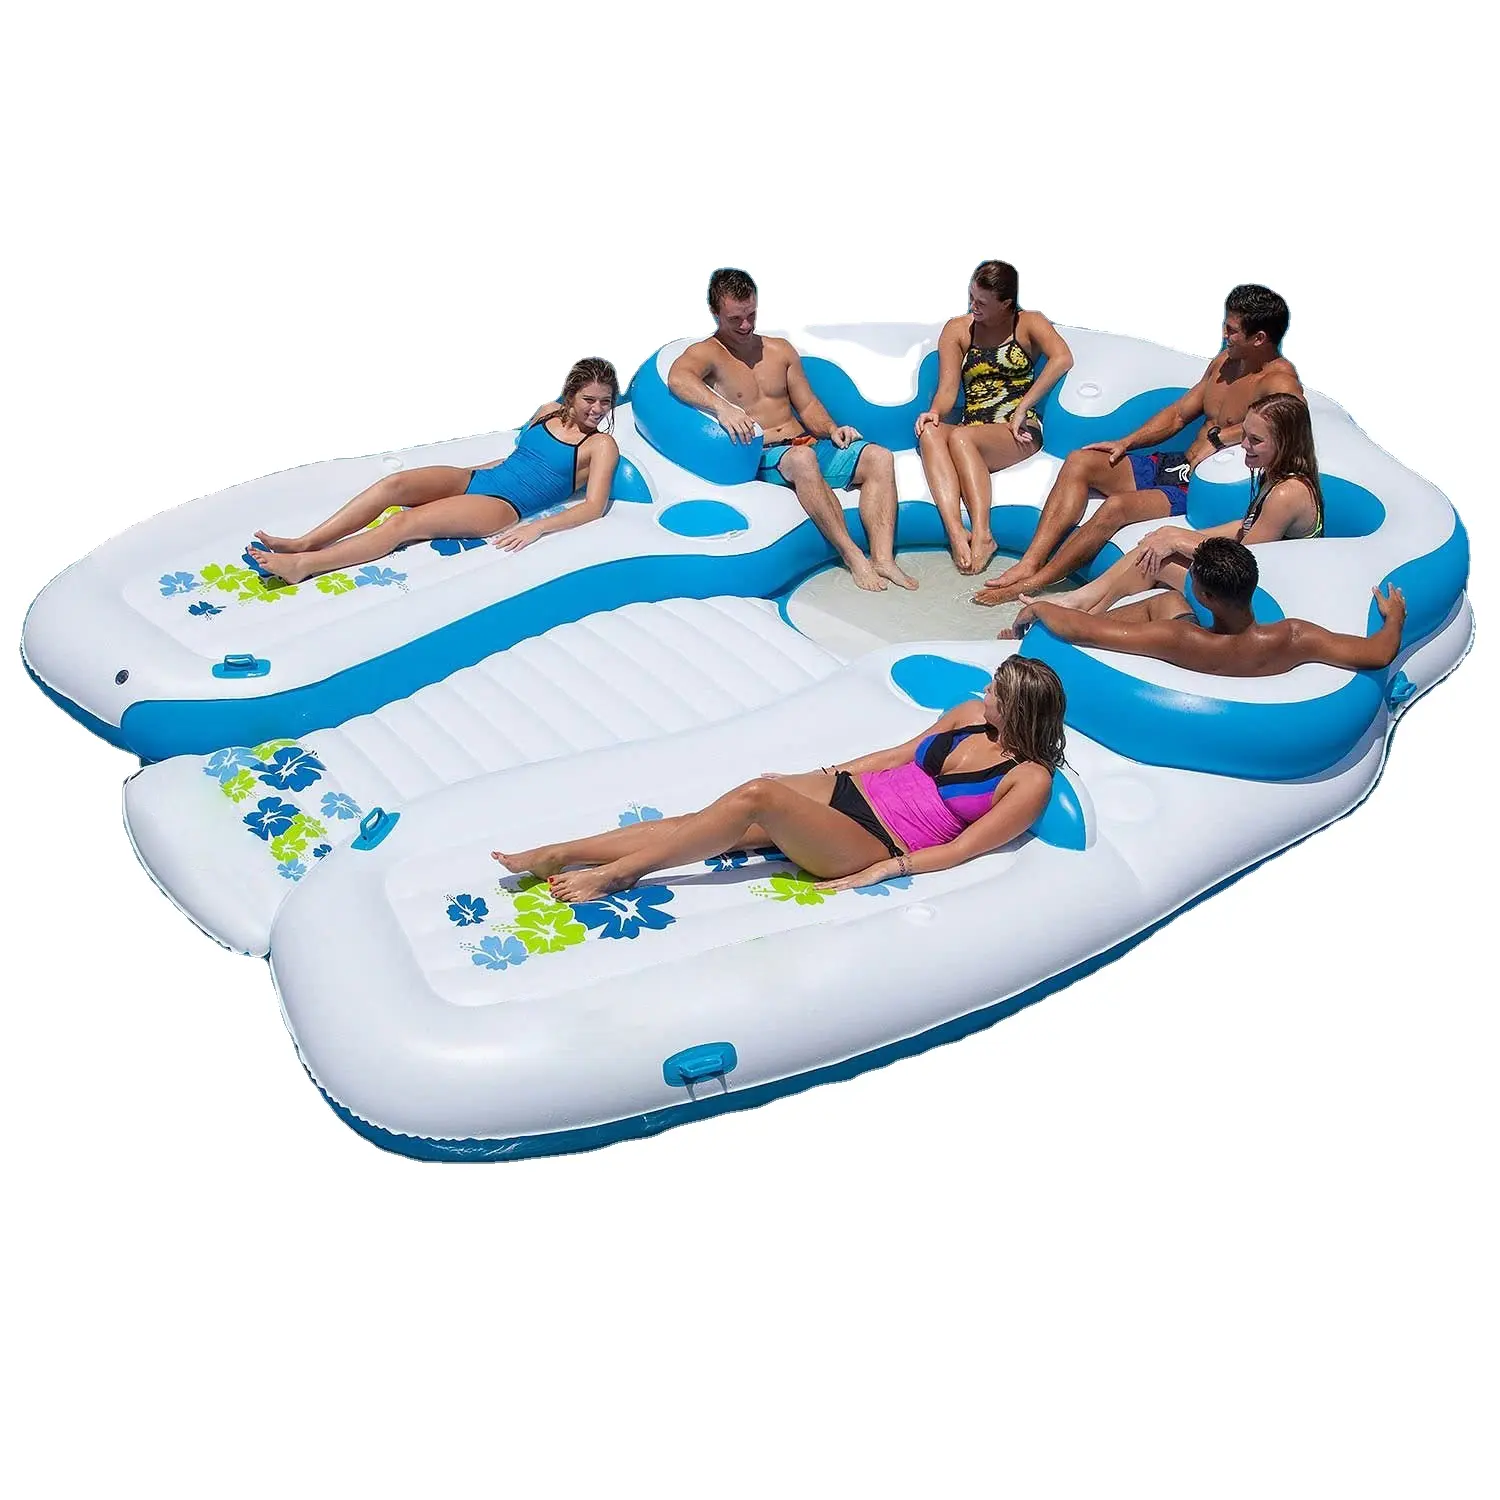 Custom-made water float platform for jet ski inflatable floating island for family